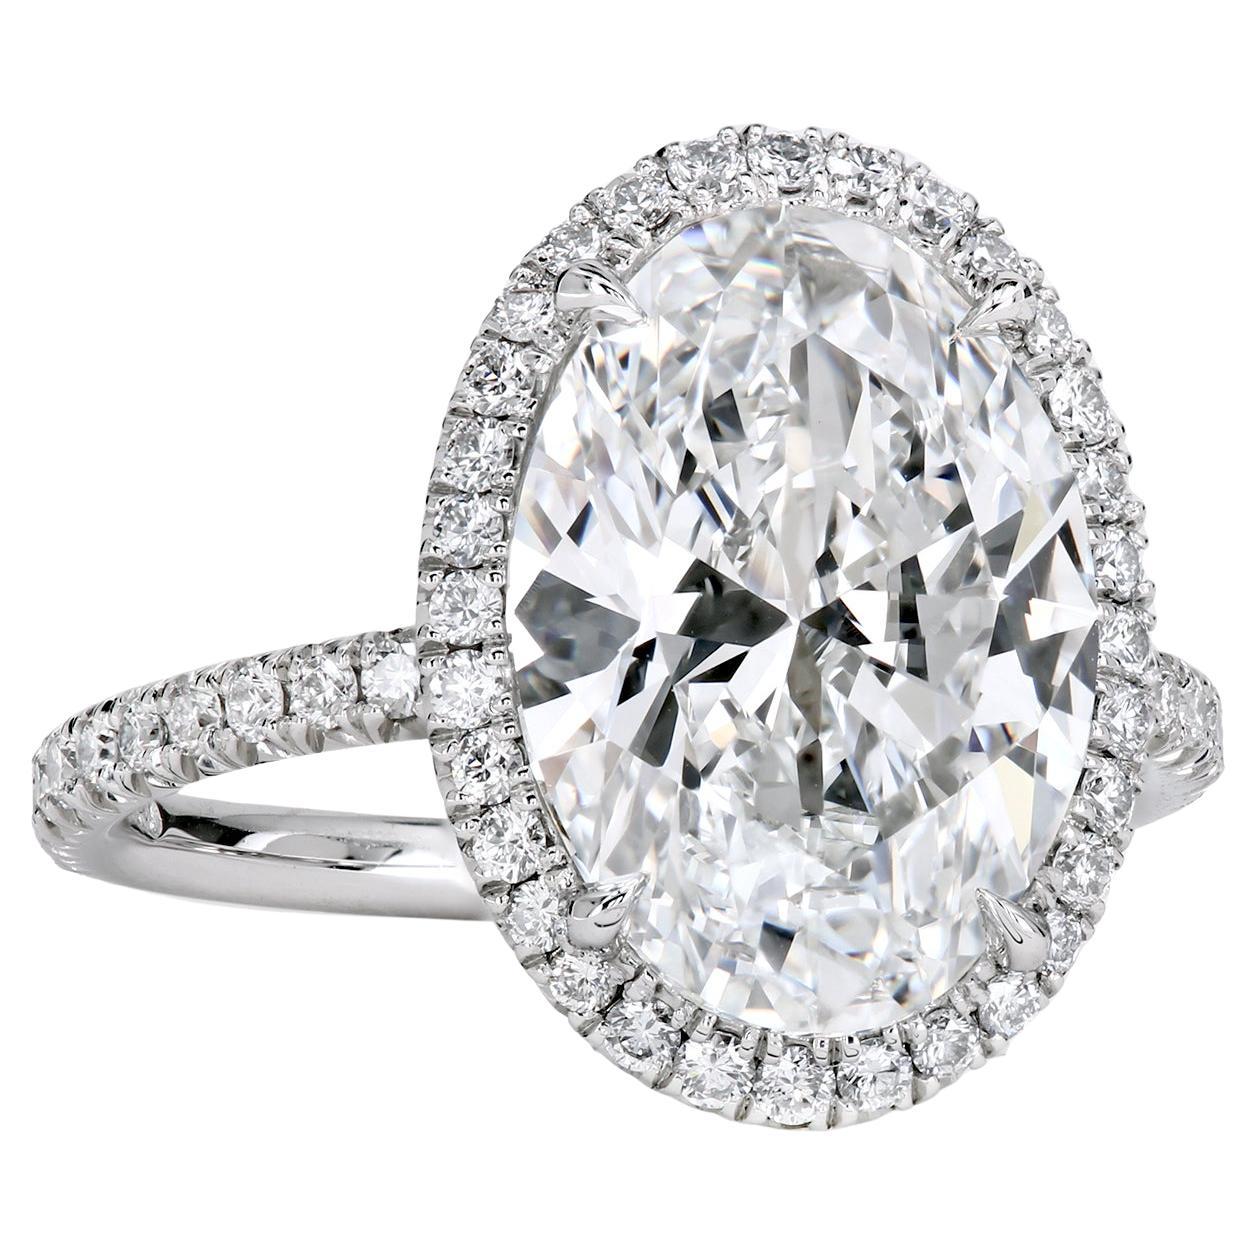 Leon Mege Platin-Halo-Ring mit 3,01 Karat ovalem Diamanten.